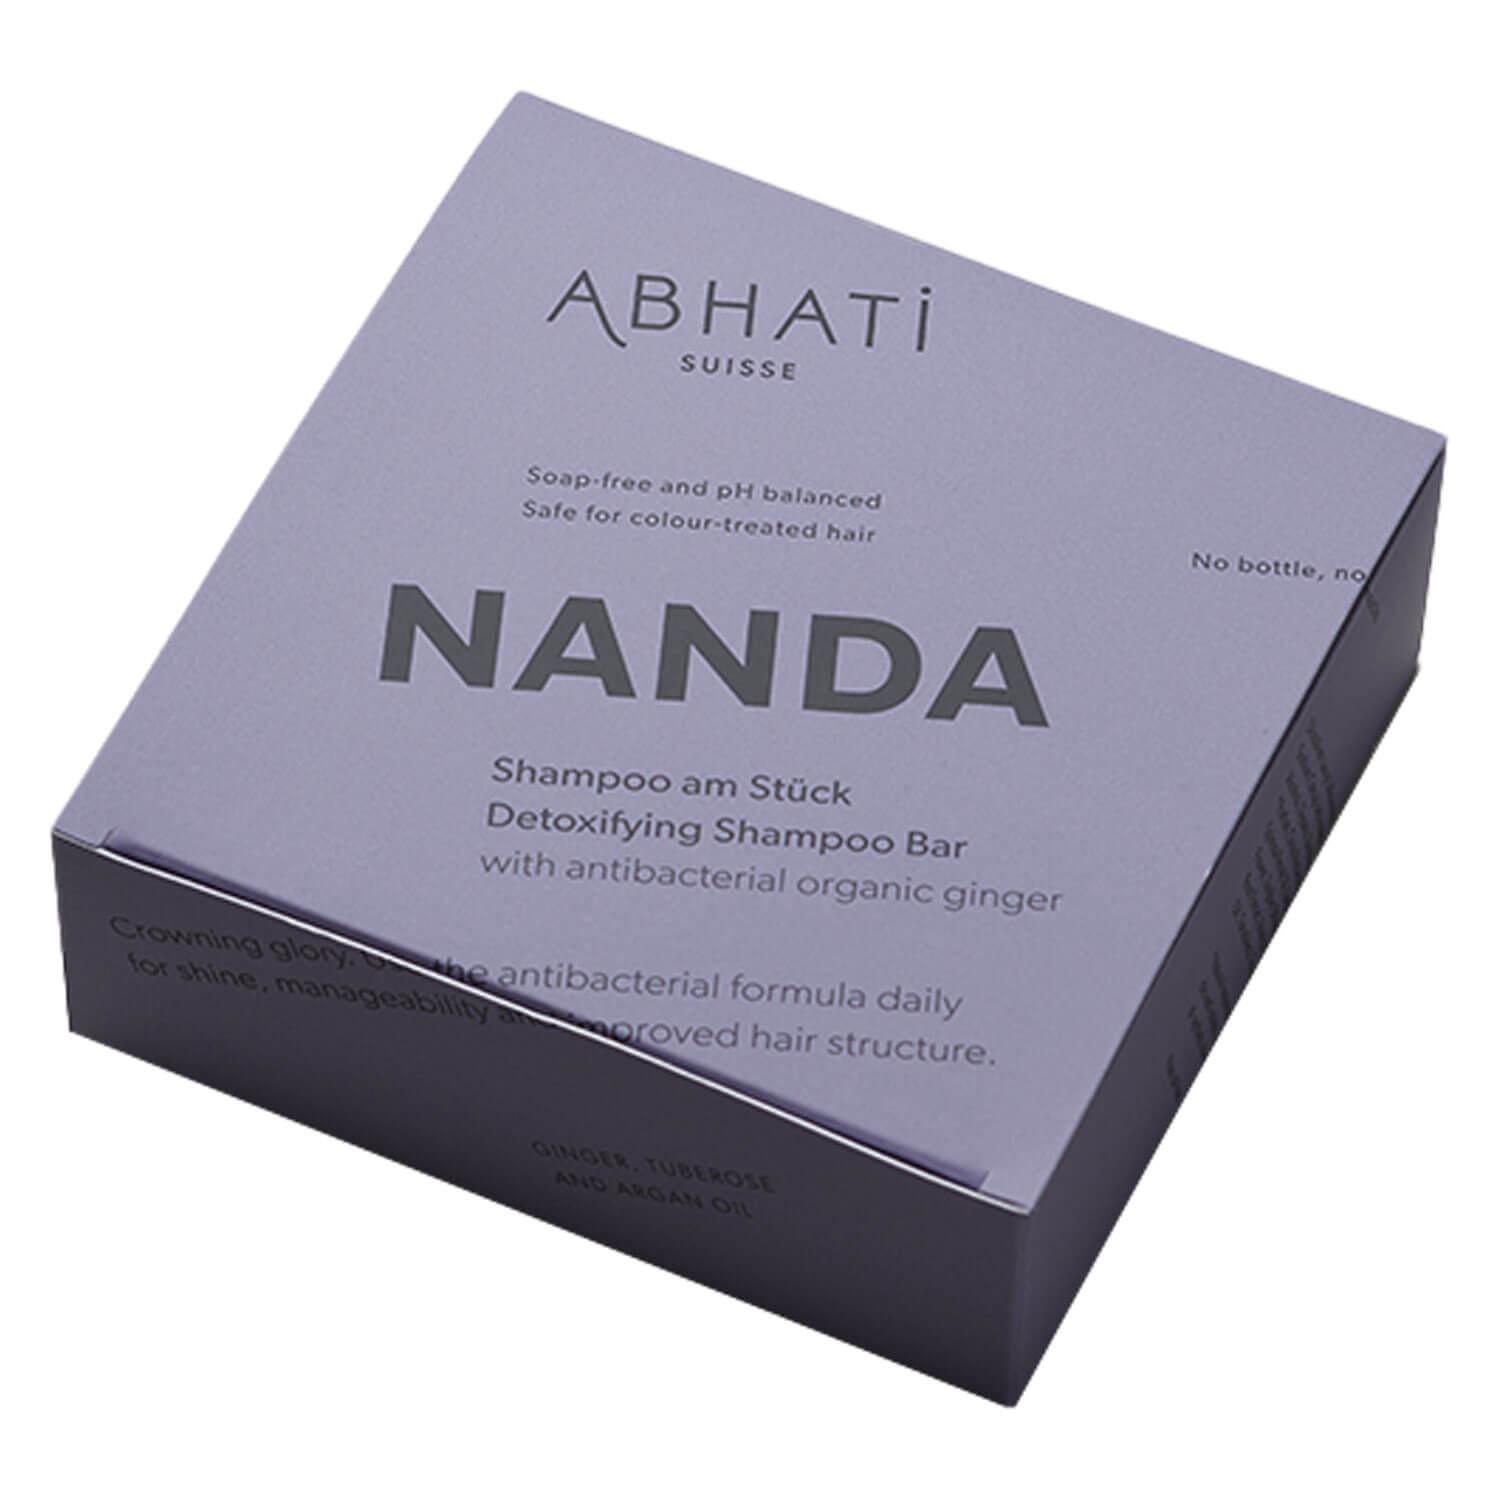 ABHATI Suisse - Nanda Detoxifying Shampoo Bar